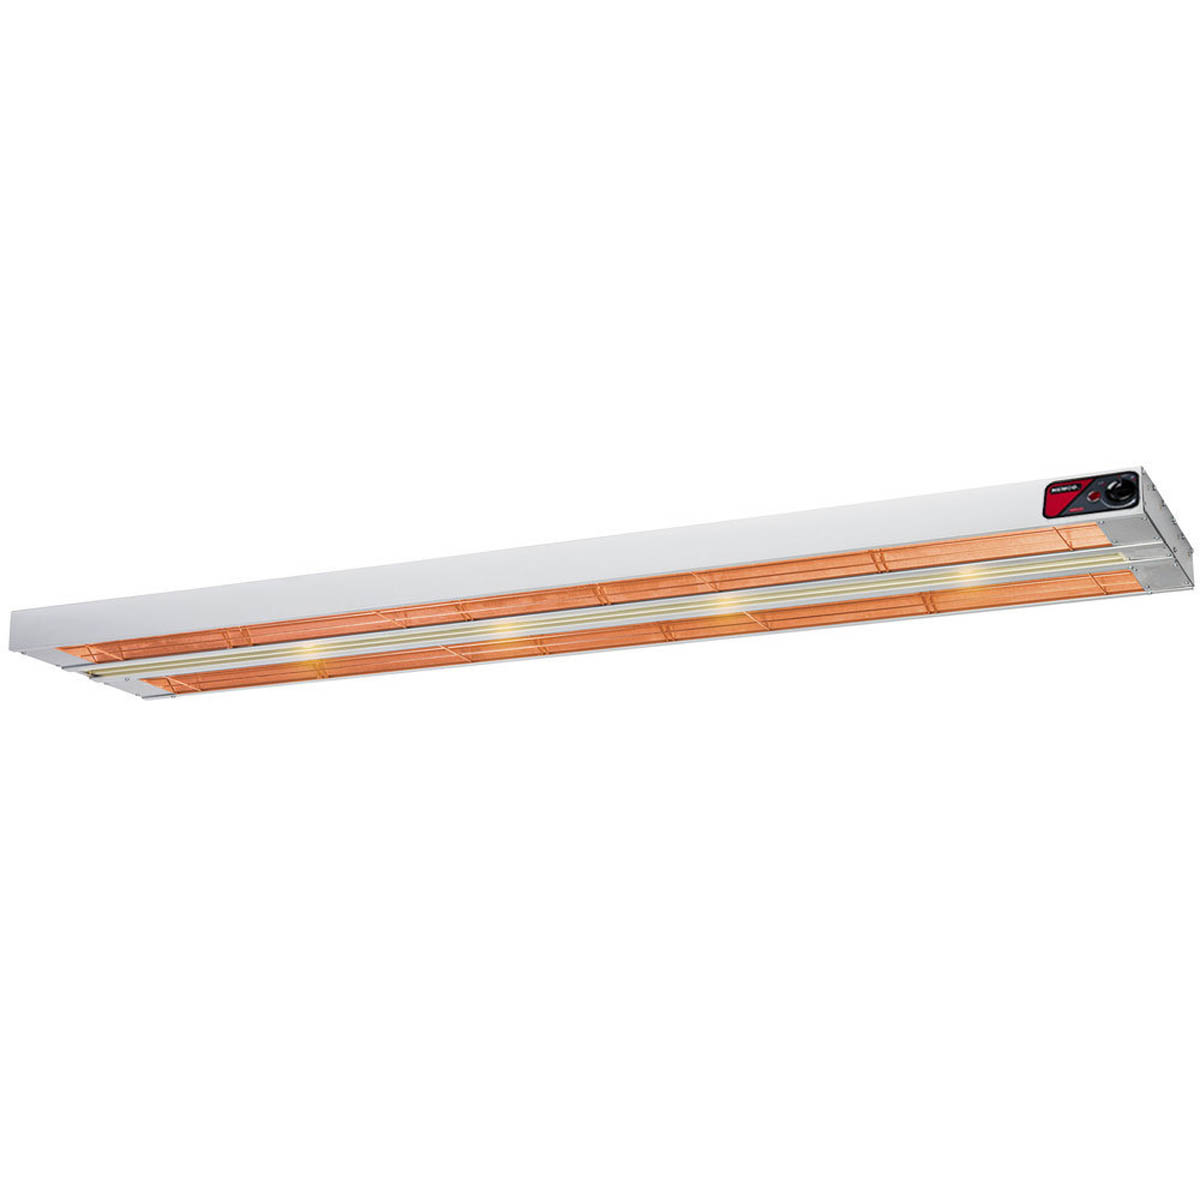 Nemco 6151-36-240 Strip Type Heat Lamp